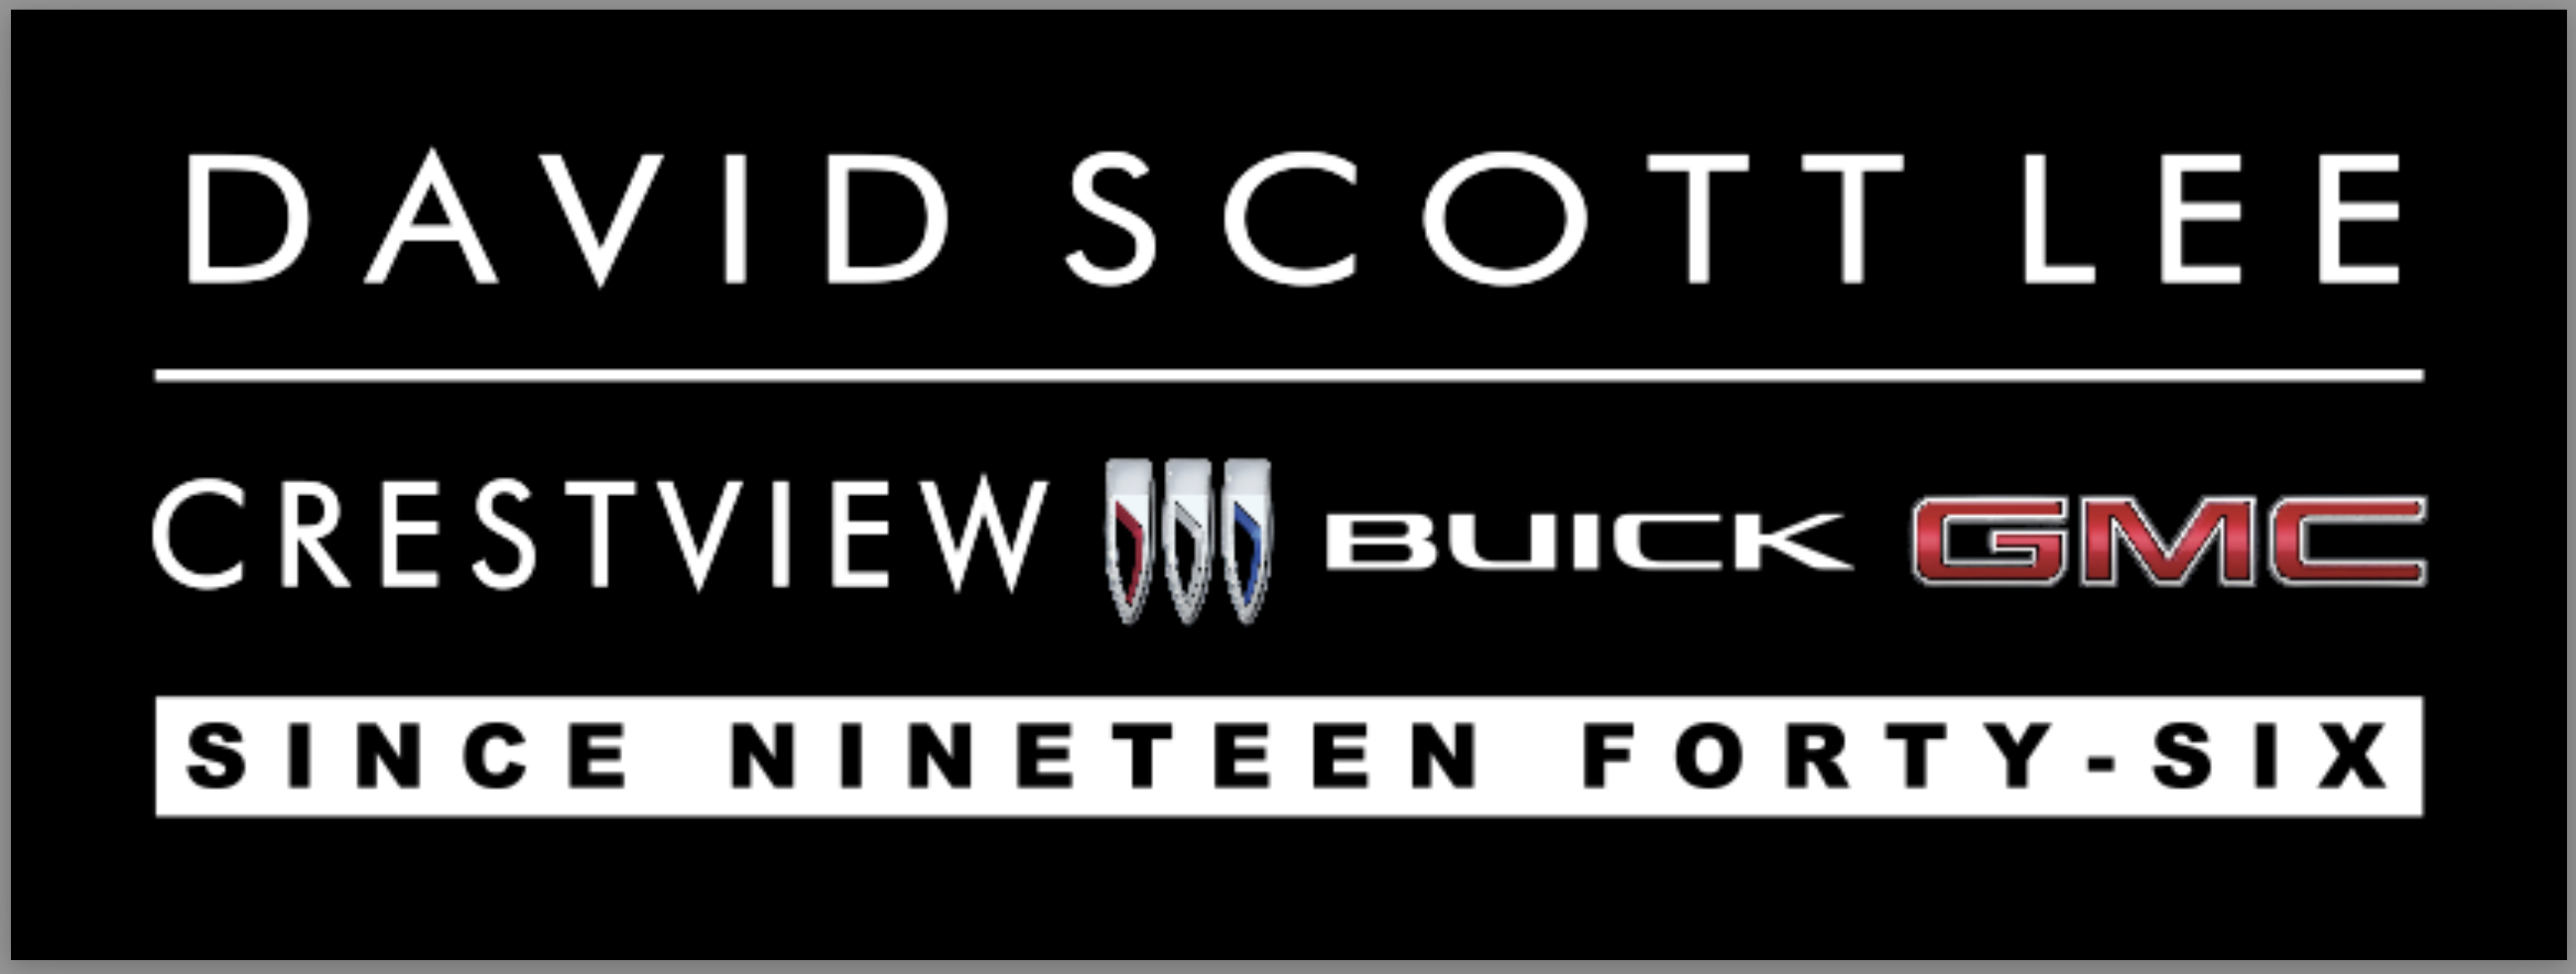 David Scott Lee Buick GMC